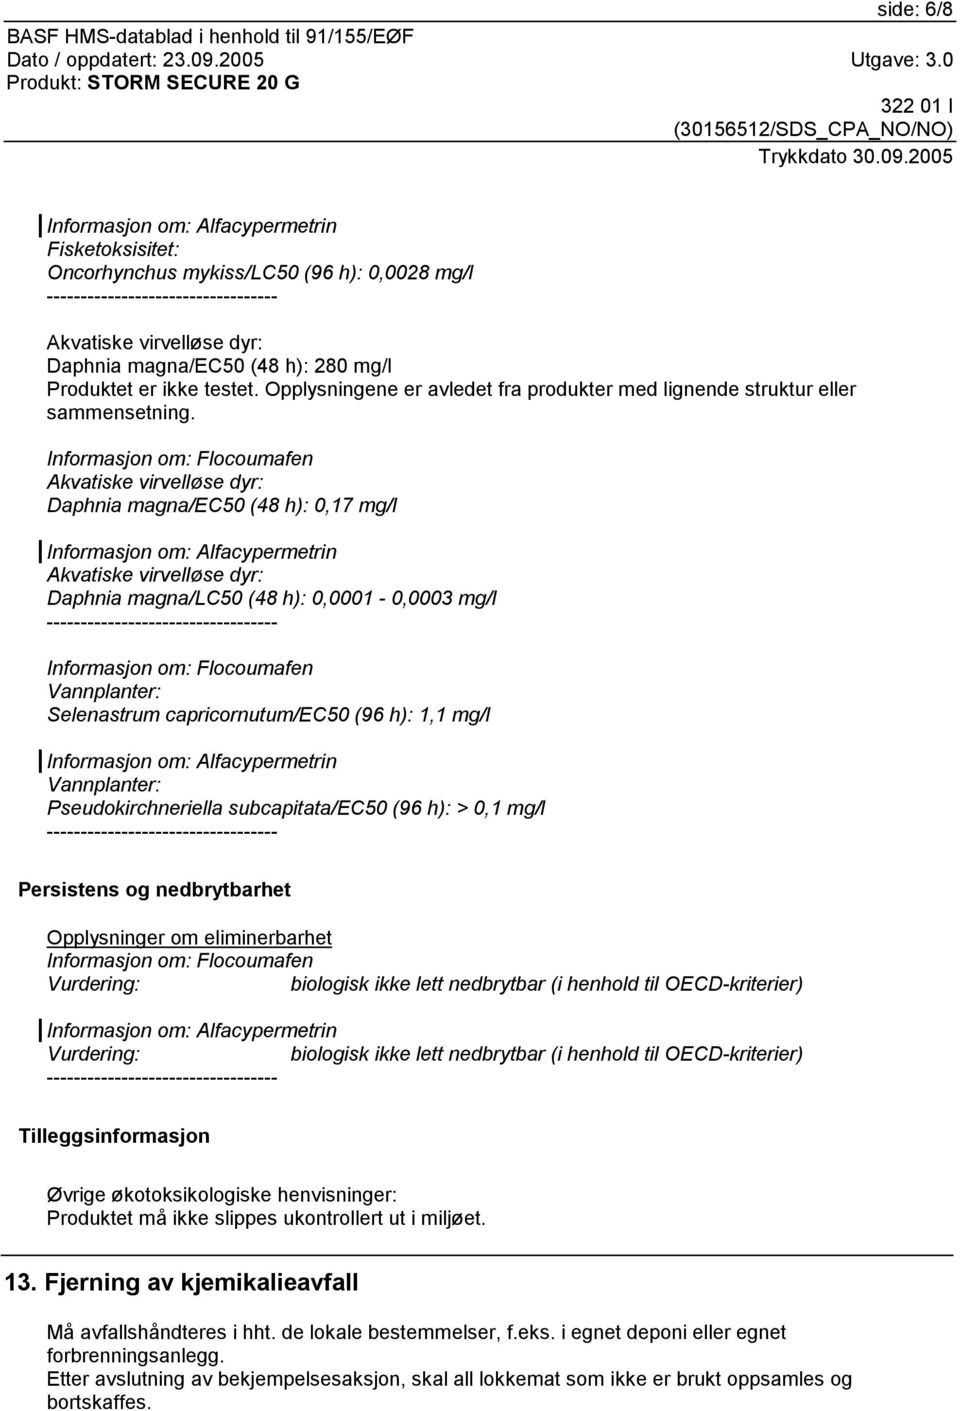 Akvatiske virvelløse dyr: Daphnia magna/ec50 (48 h): 0,17 mg/l Akvatiske virvelløse dyr: Daphnia magna/lc50 (48 h): 0,0001-0,0003 mg/l Vannplanter: Selenastrum capricornutum/ec50 (96 h): 1,1 mg/l